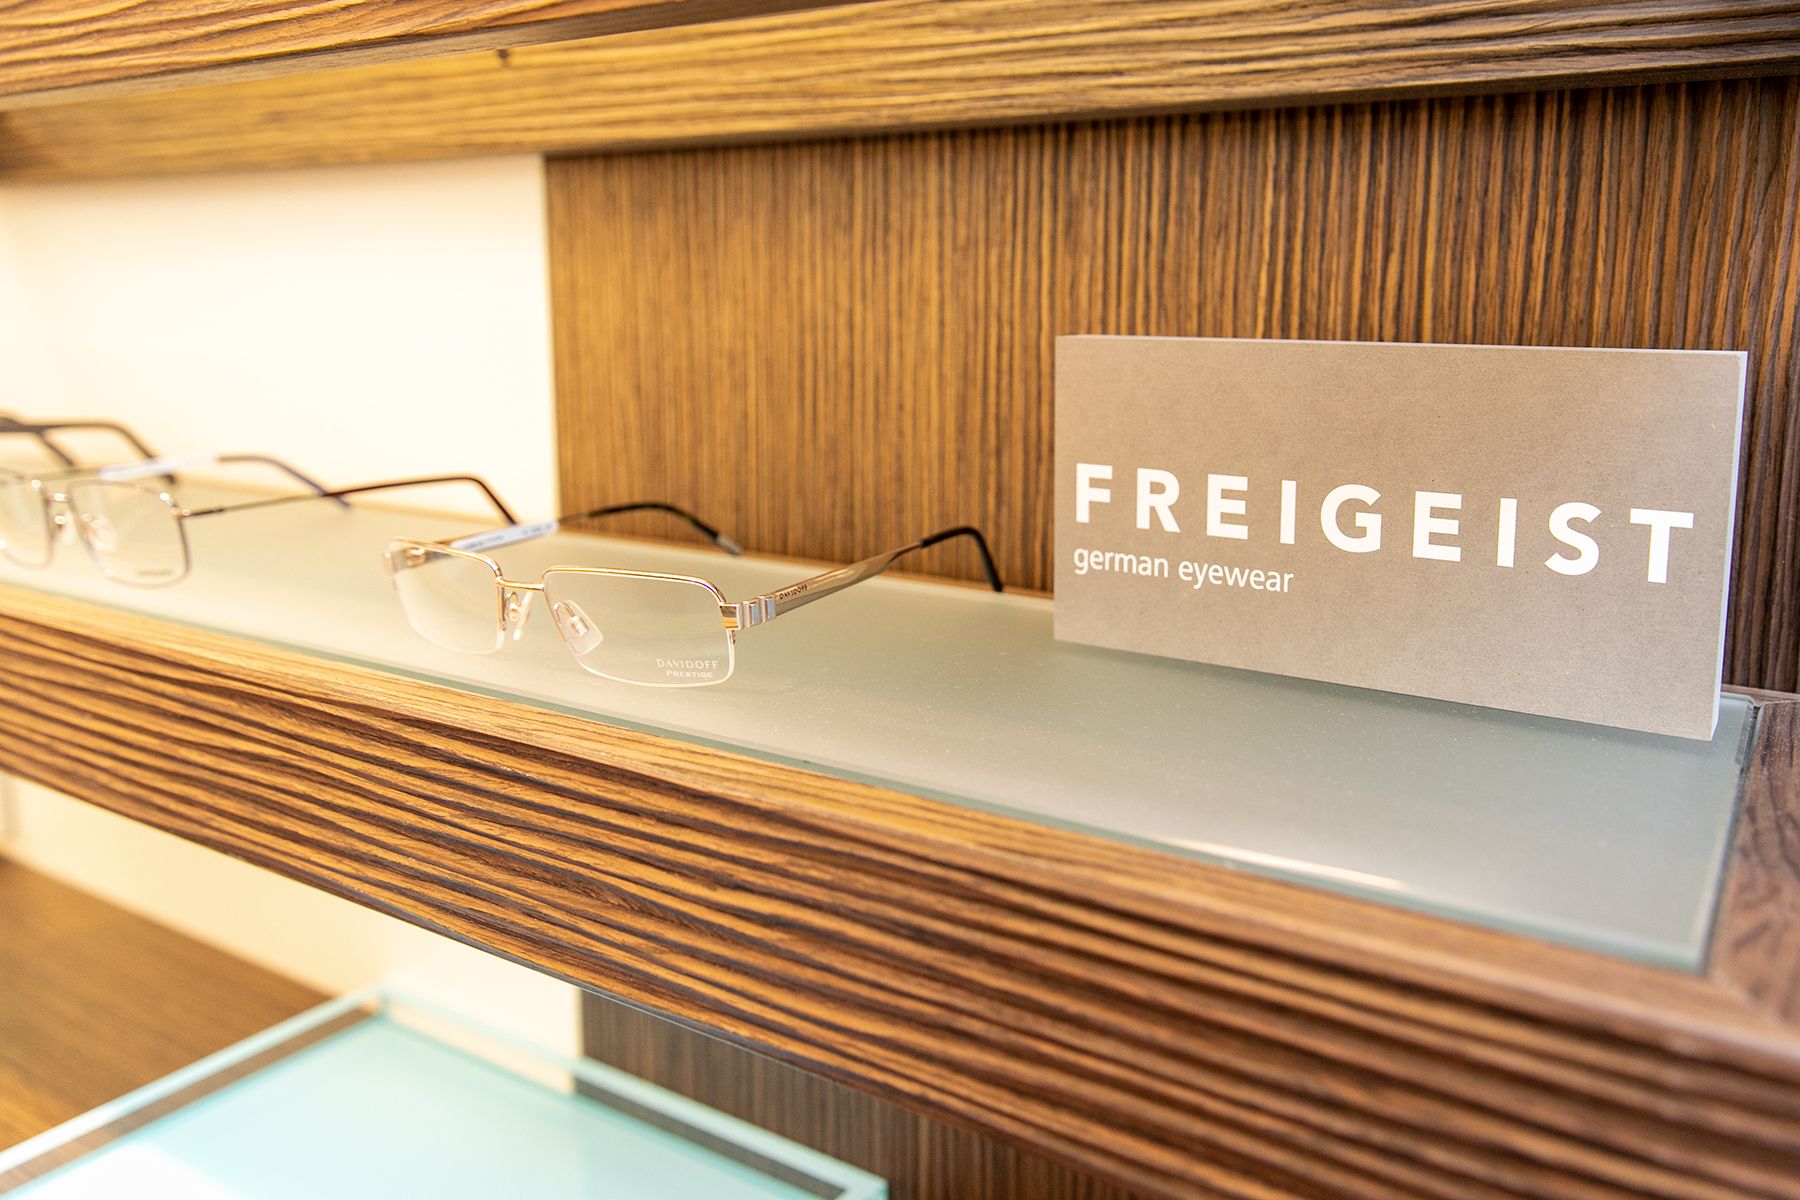 Freigeist german eyewear